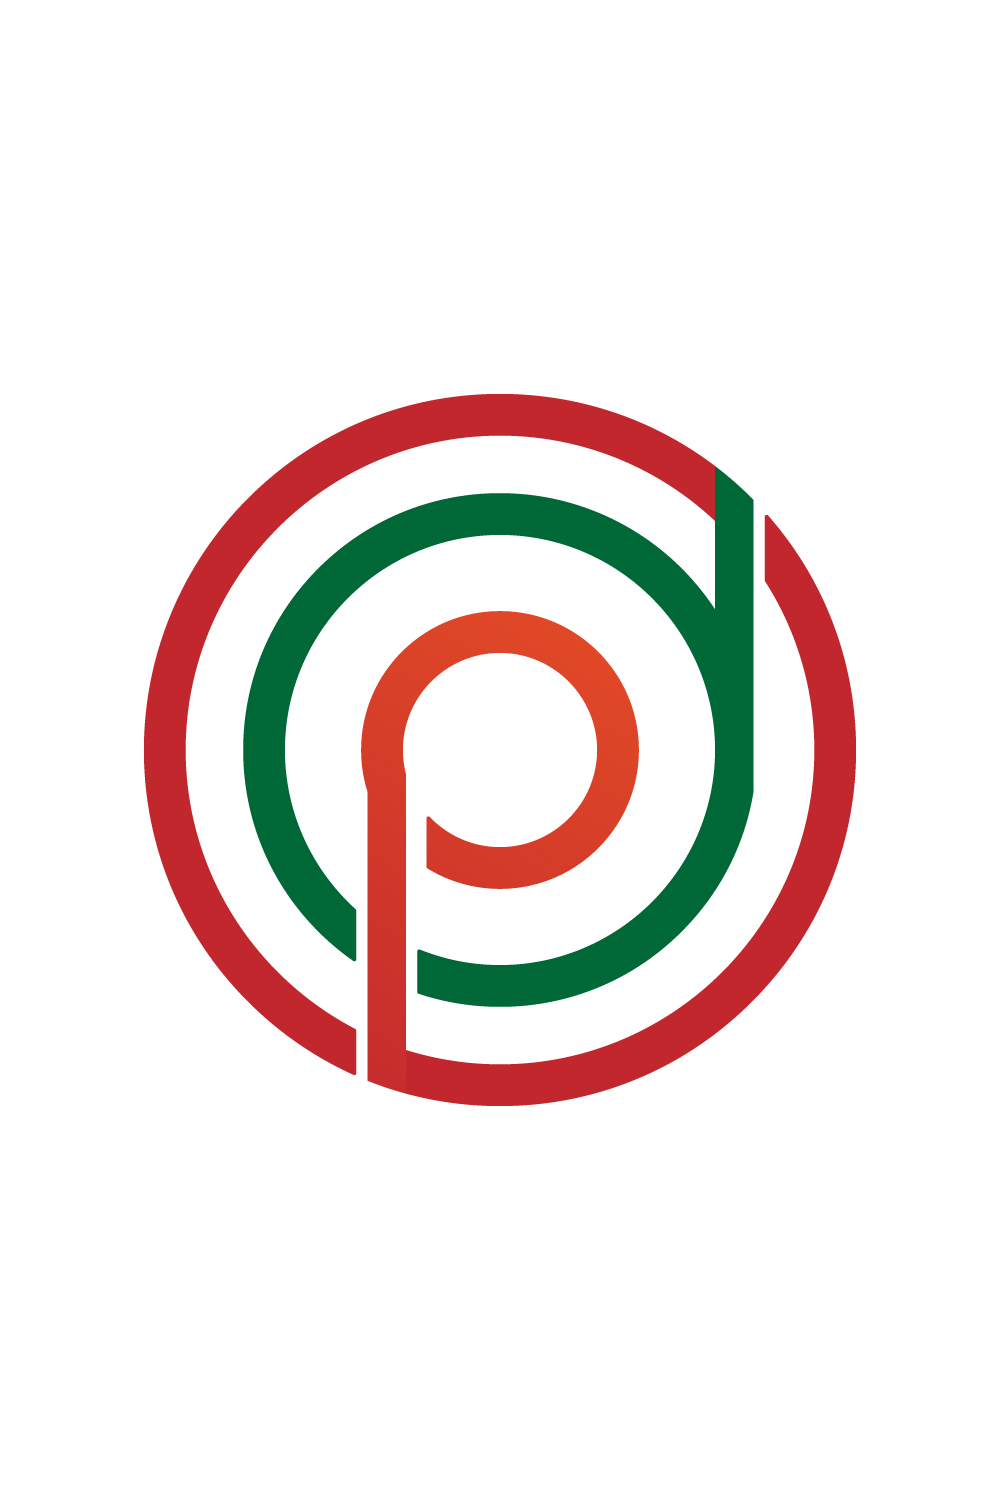 Professional PD letters logo design vector circle logo design DP logo orange and green color red circle logo pinterest preview image.